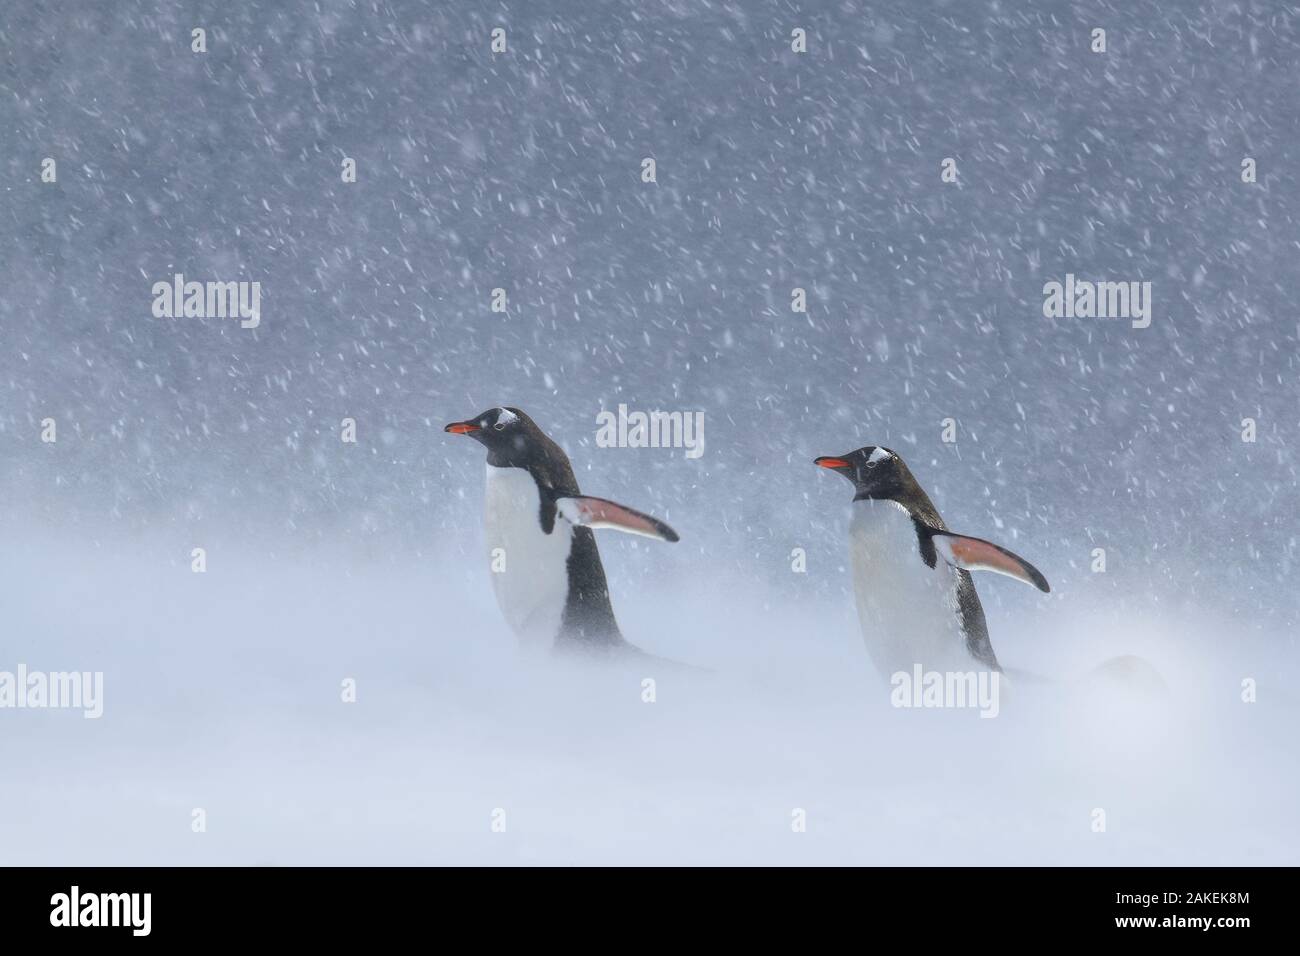 Pinguino Gentoo (Pygoscelis papua) in tempesta di neve, Antartide Foto Stock